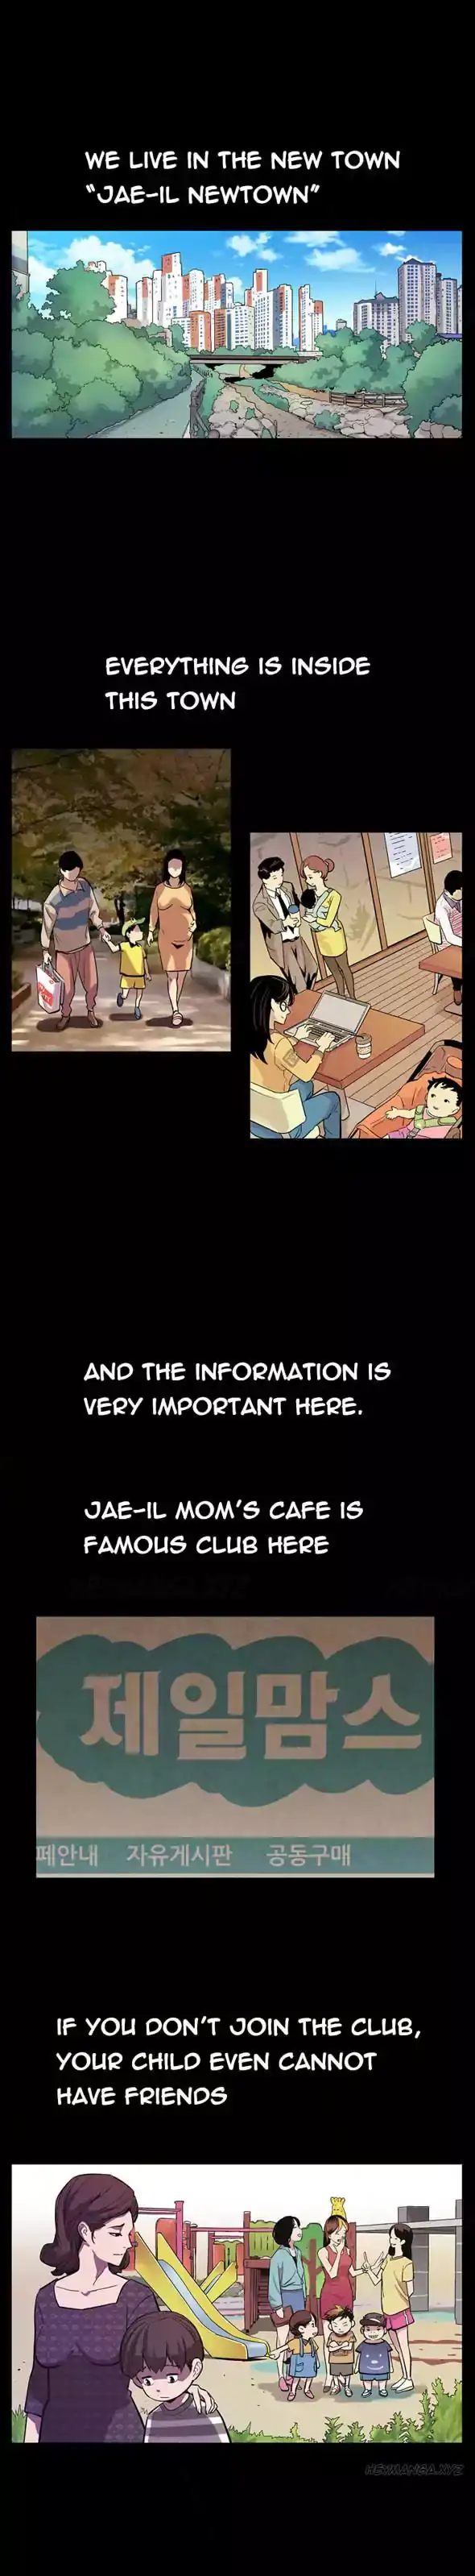 Mom Cafe image